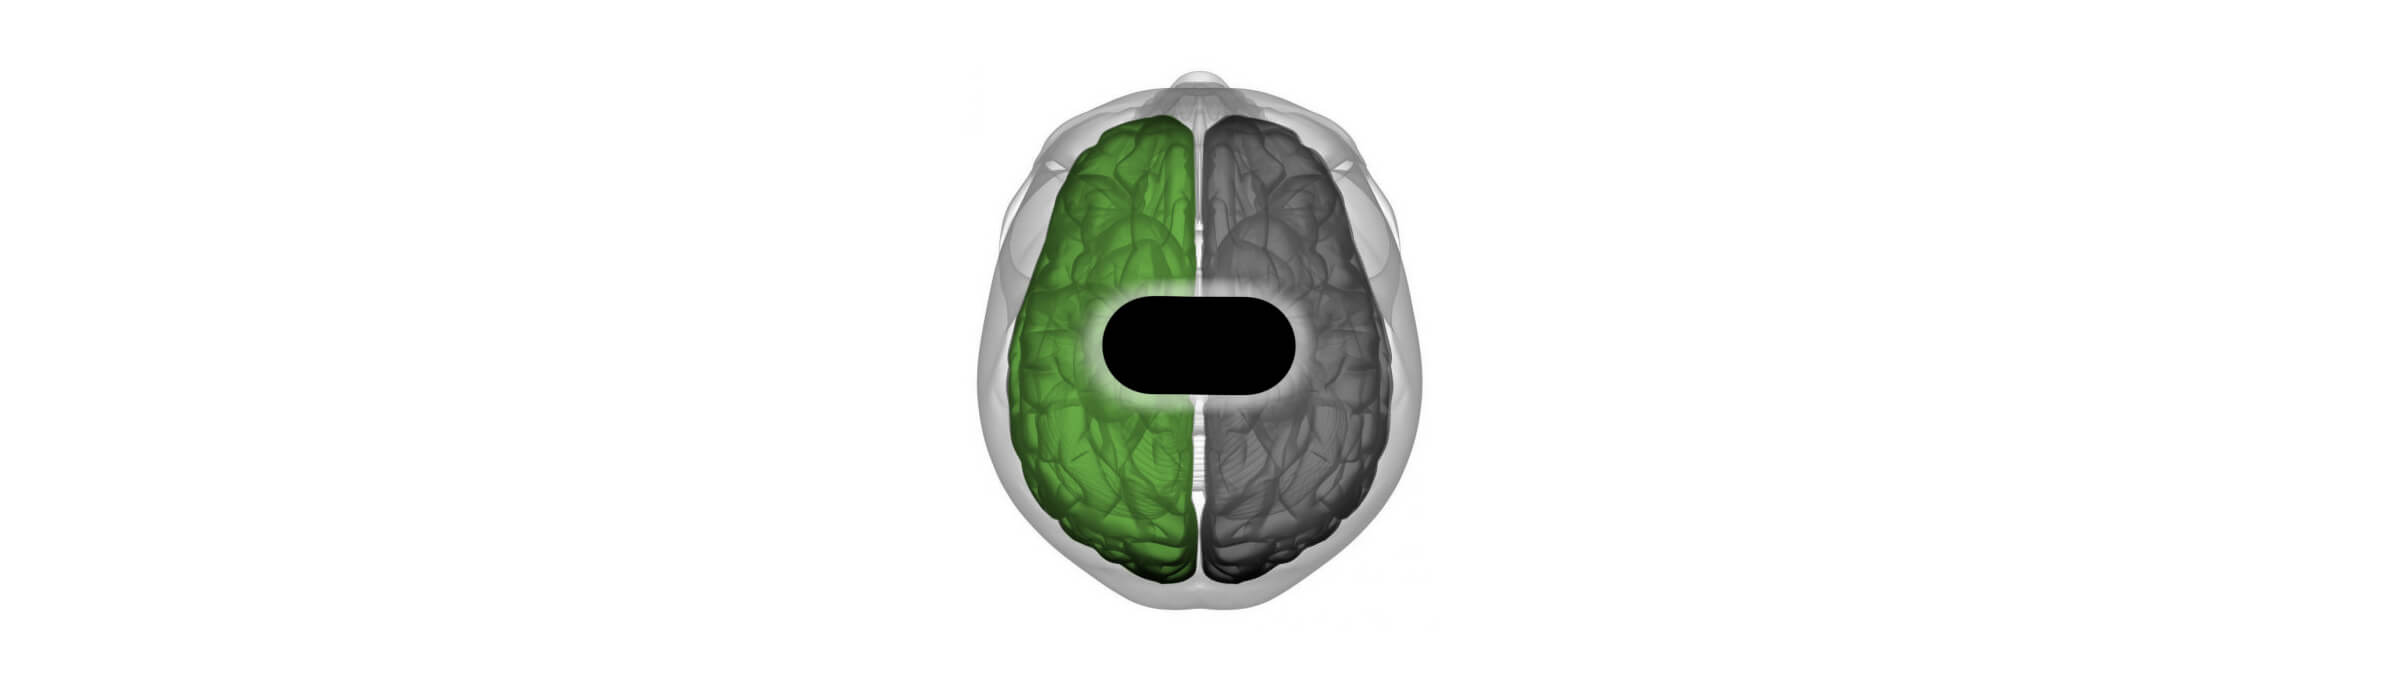 brain b1